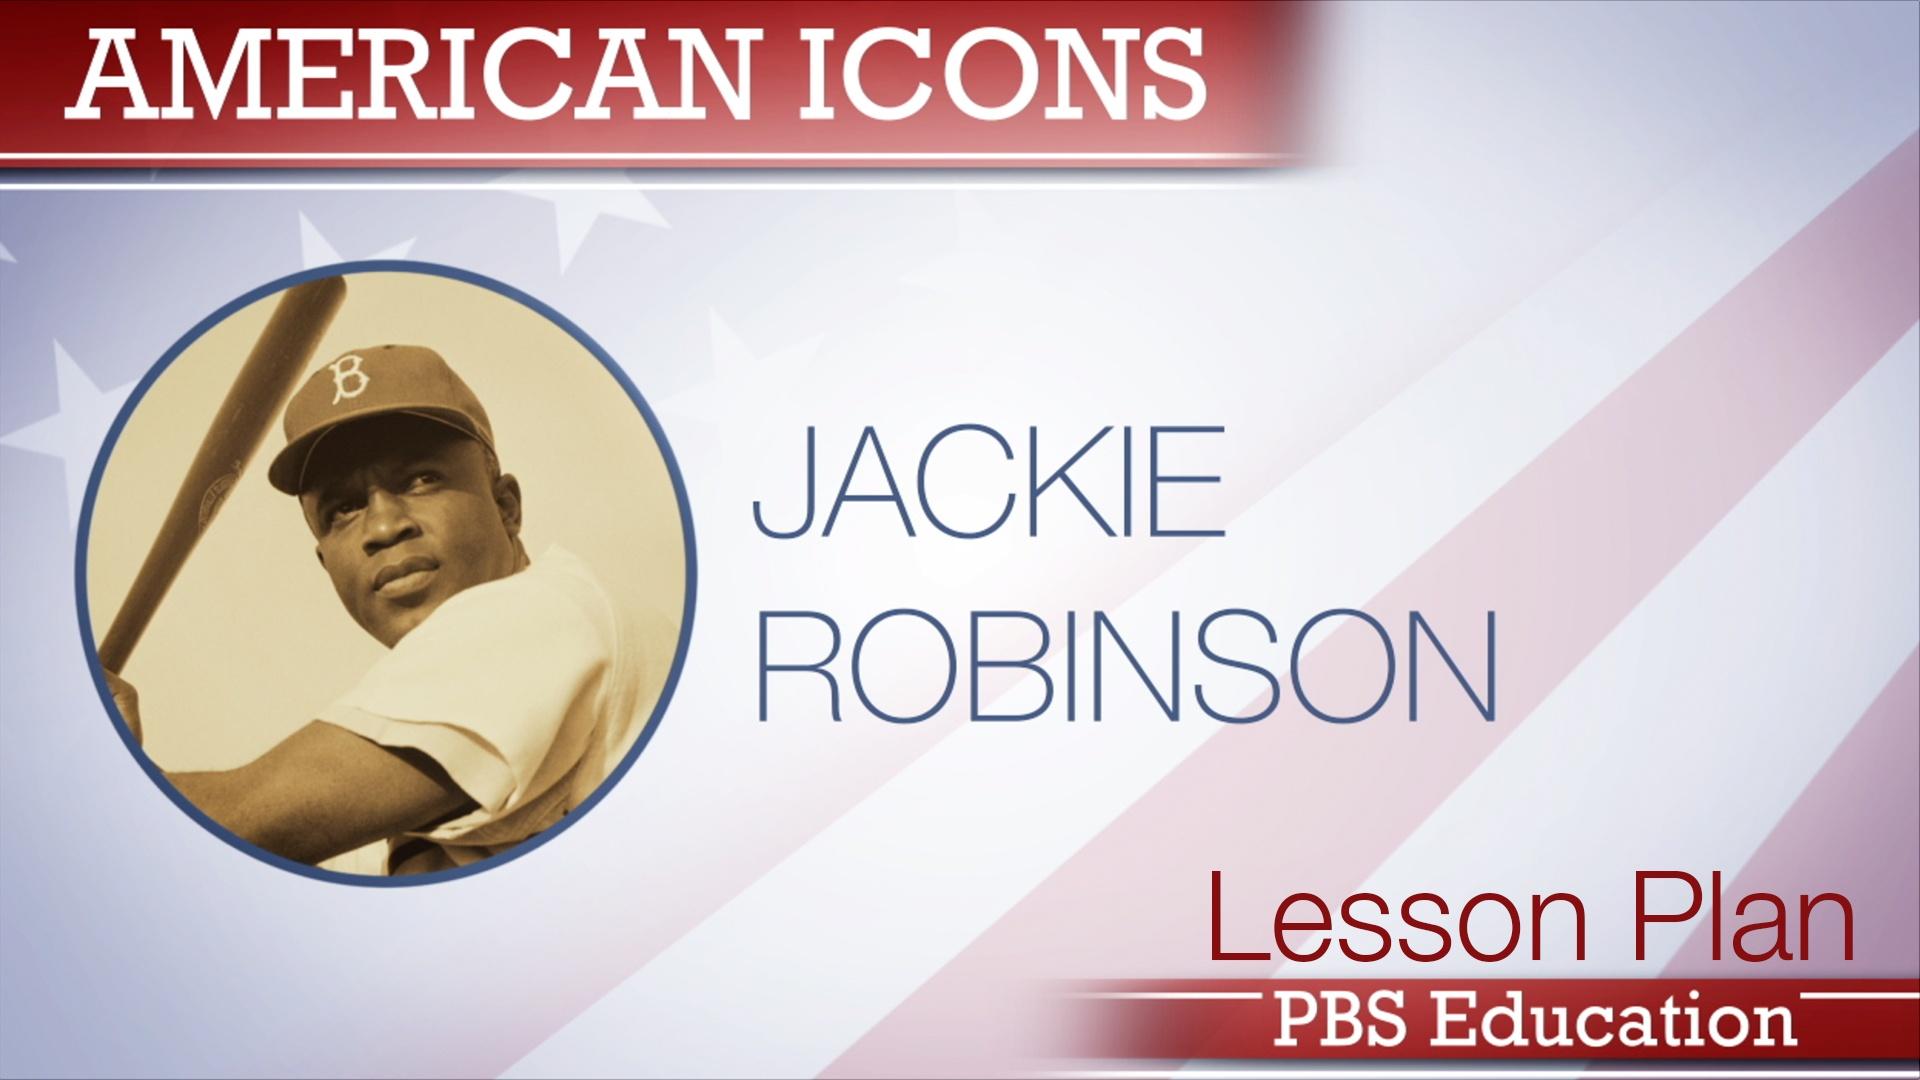 Jackie Robinson, Athlete and Activist